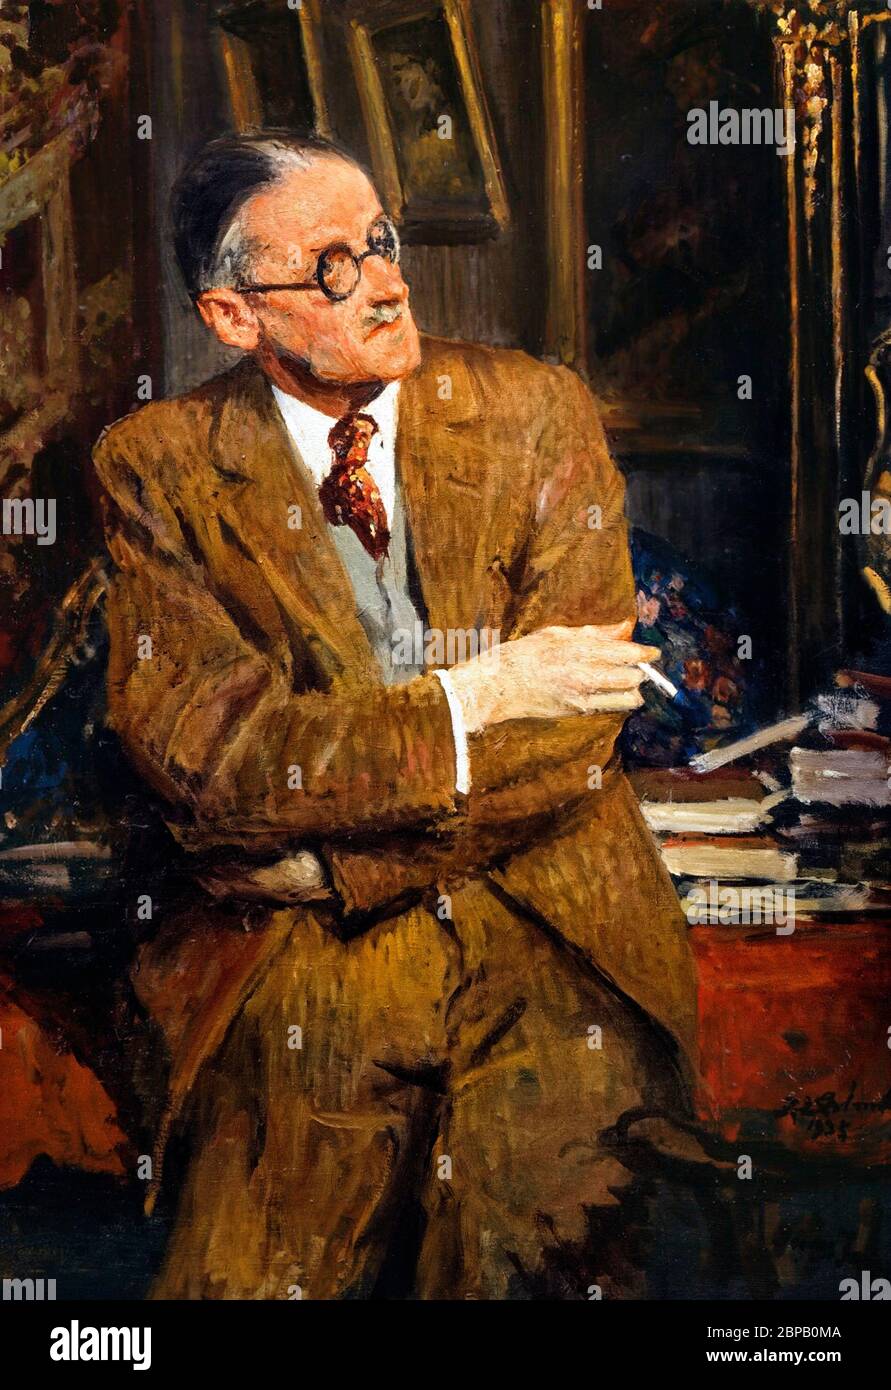 James Joyce. Portrait of the Irish writer James Joyce by Jacques-Emile Blanche, 1935 Stock Photo